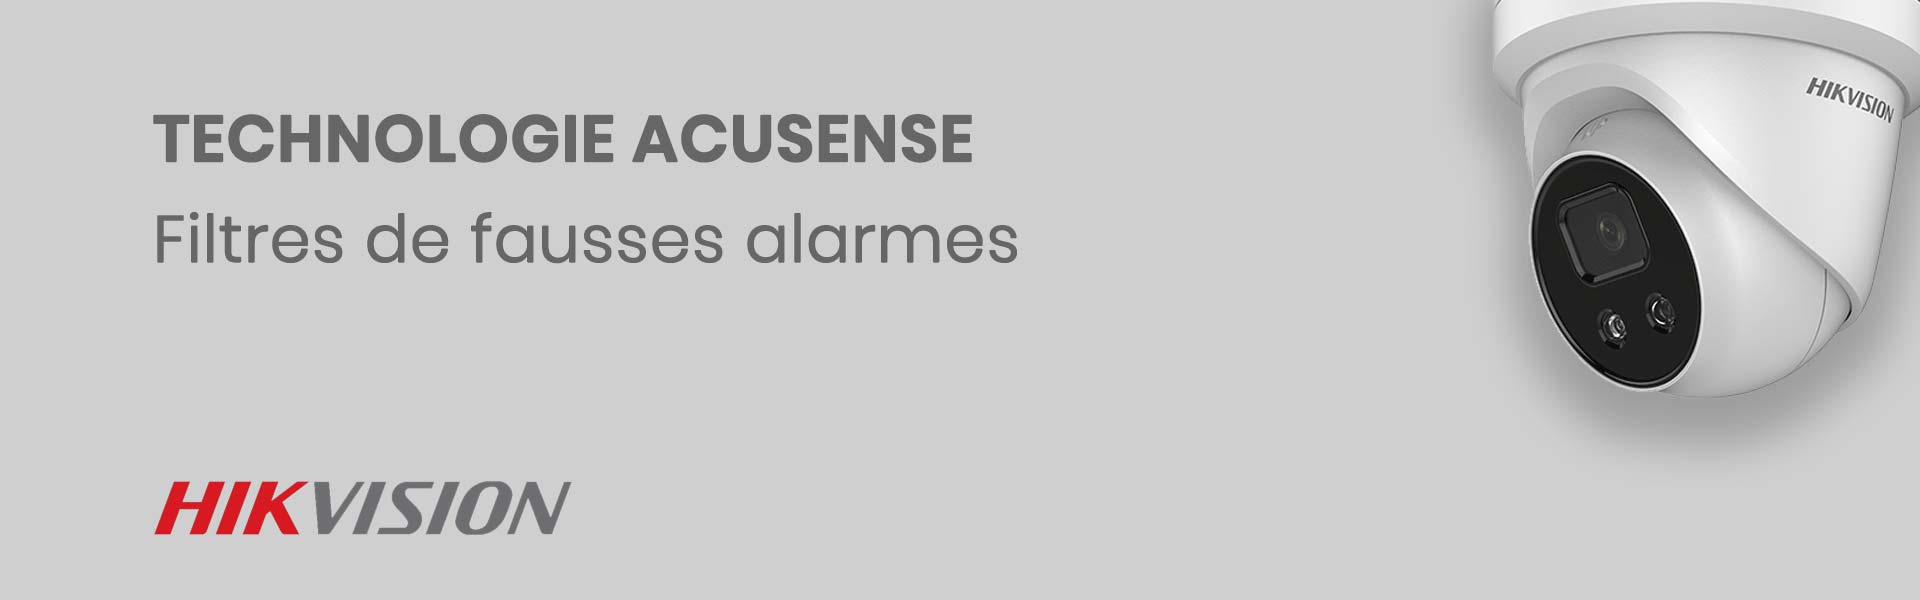 Acusense